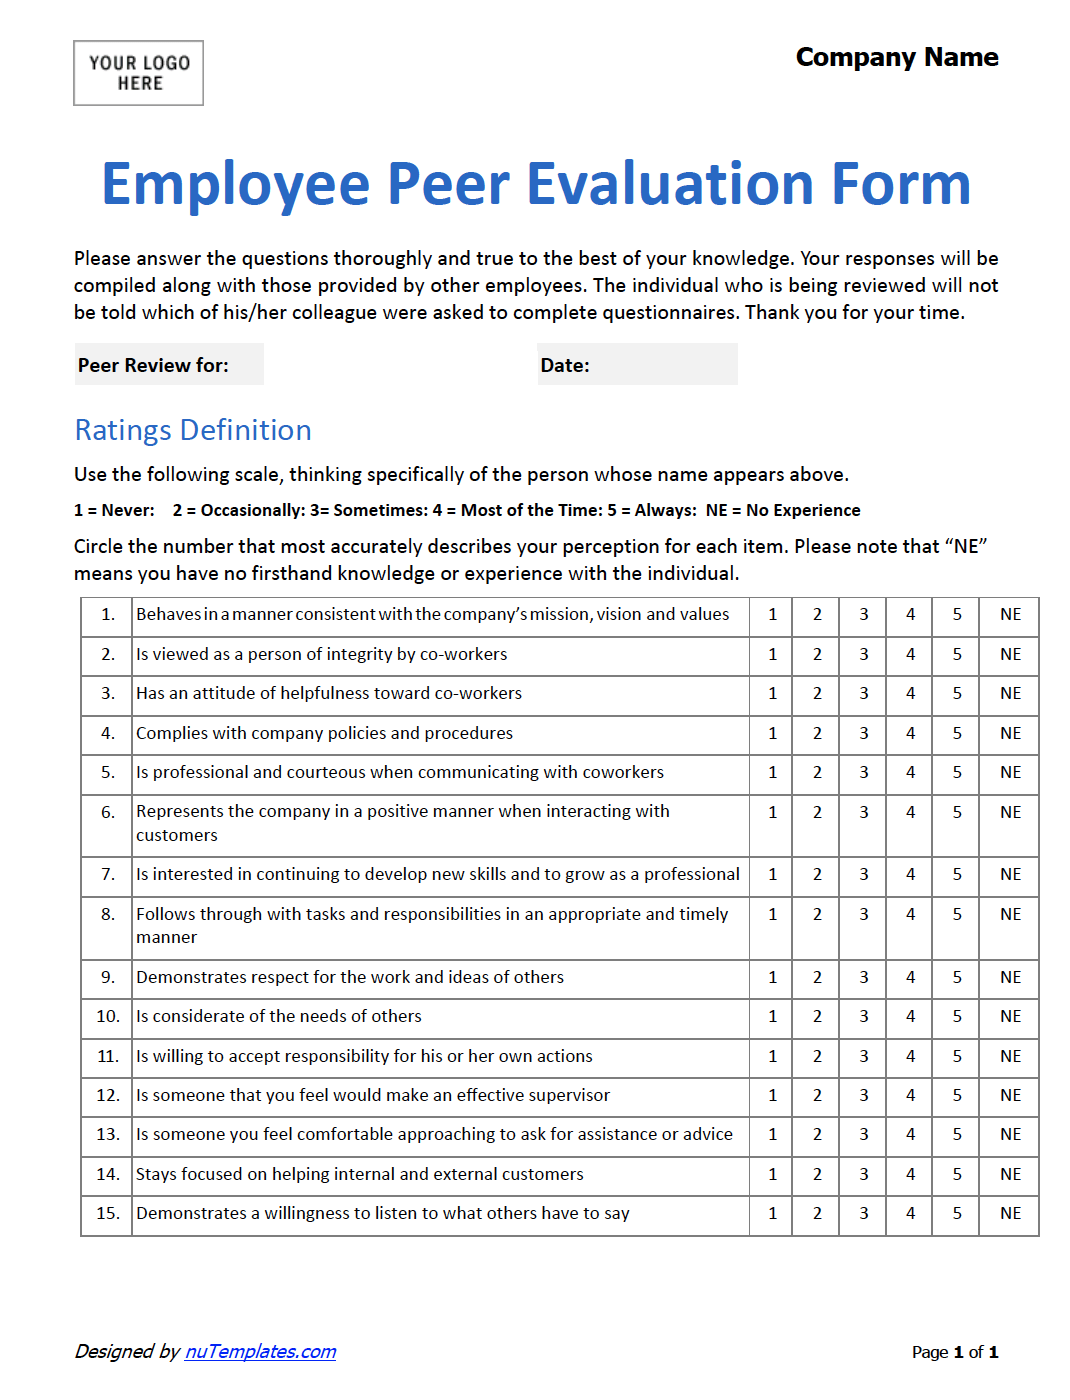 employee-peer-evaluation-form-peer-evaluation-template-nutemplates